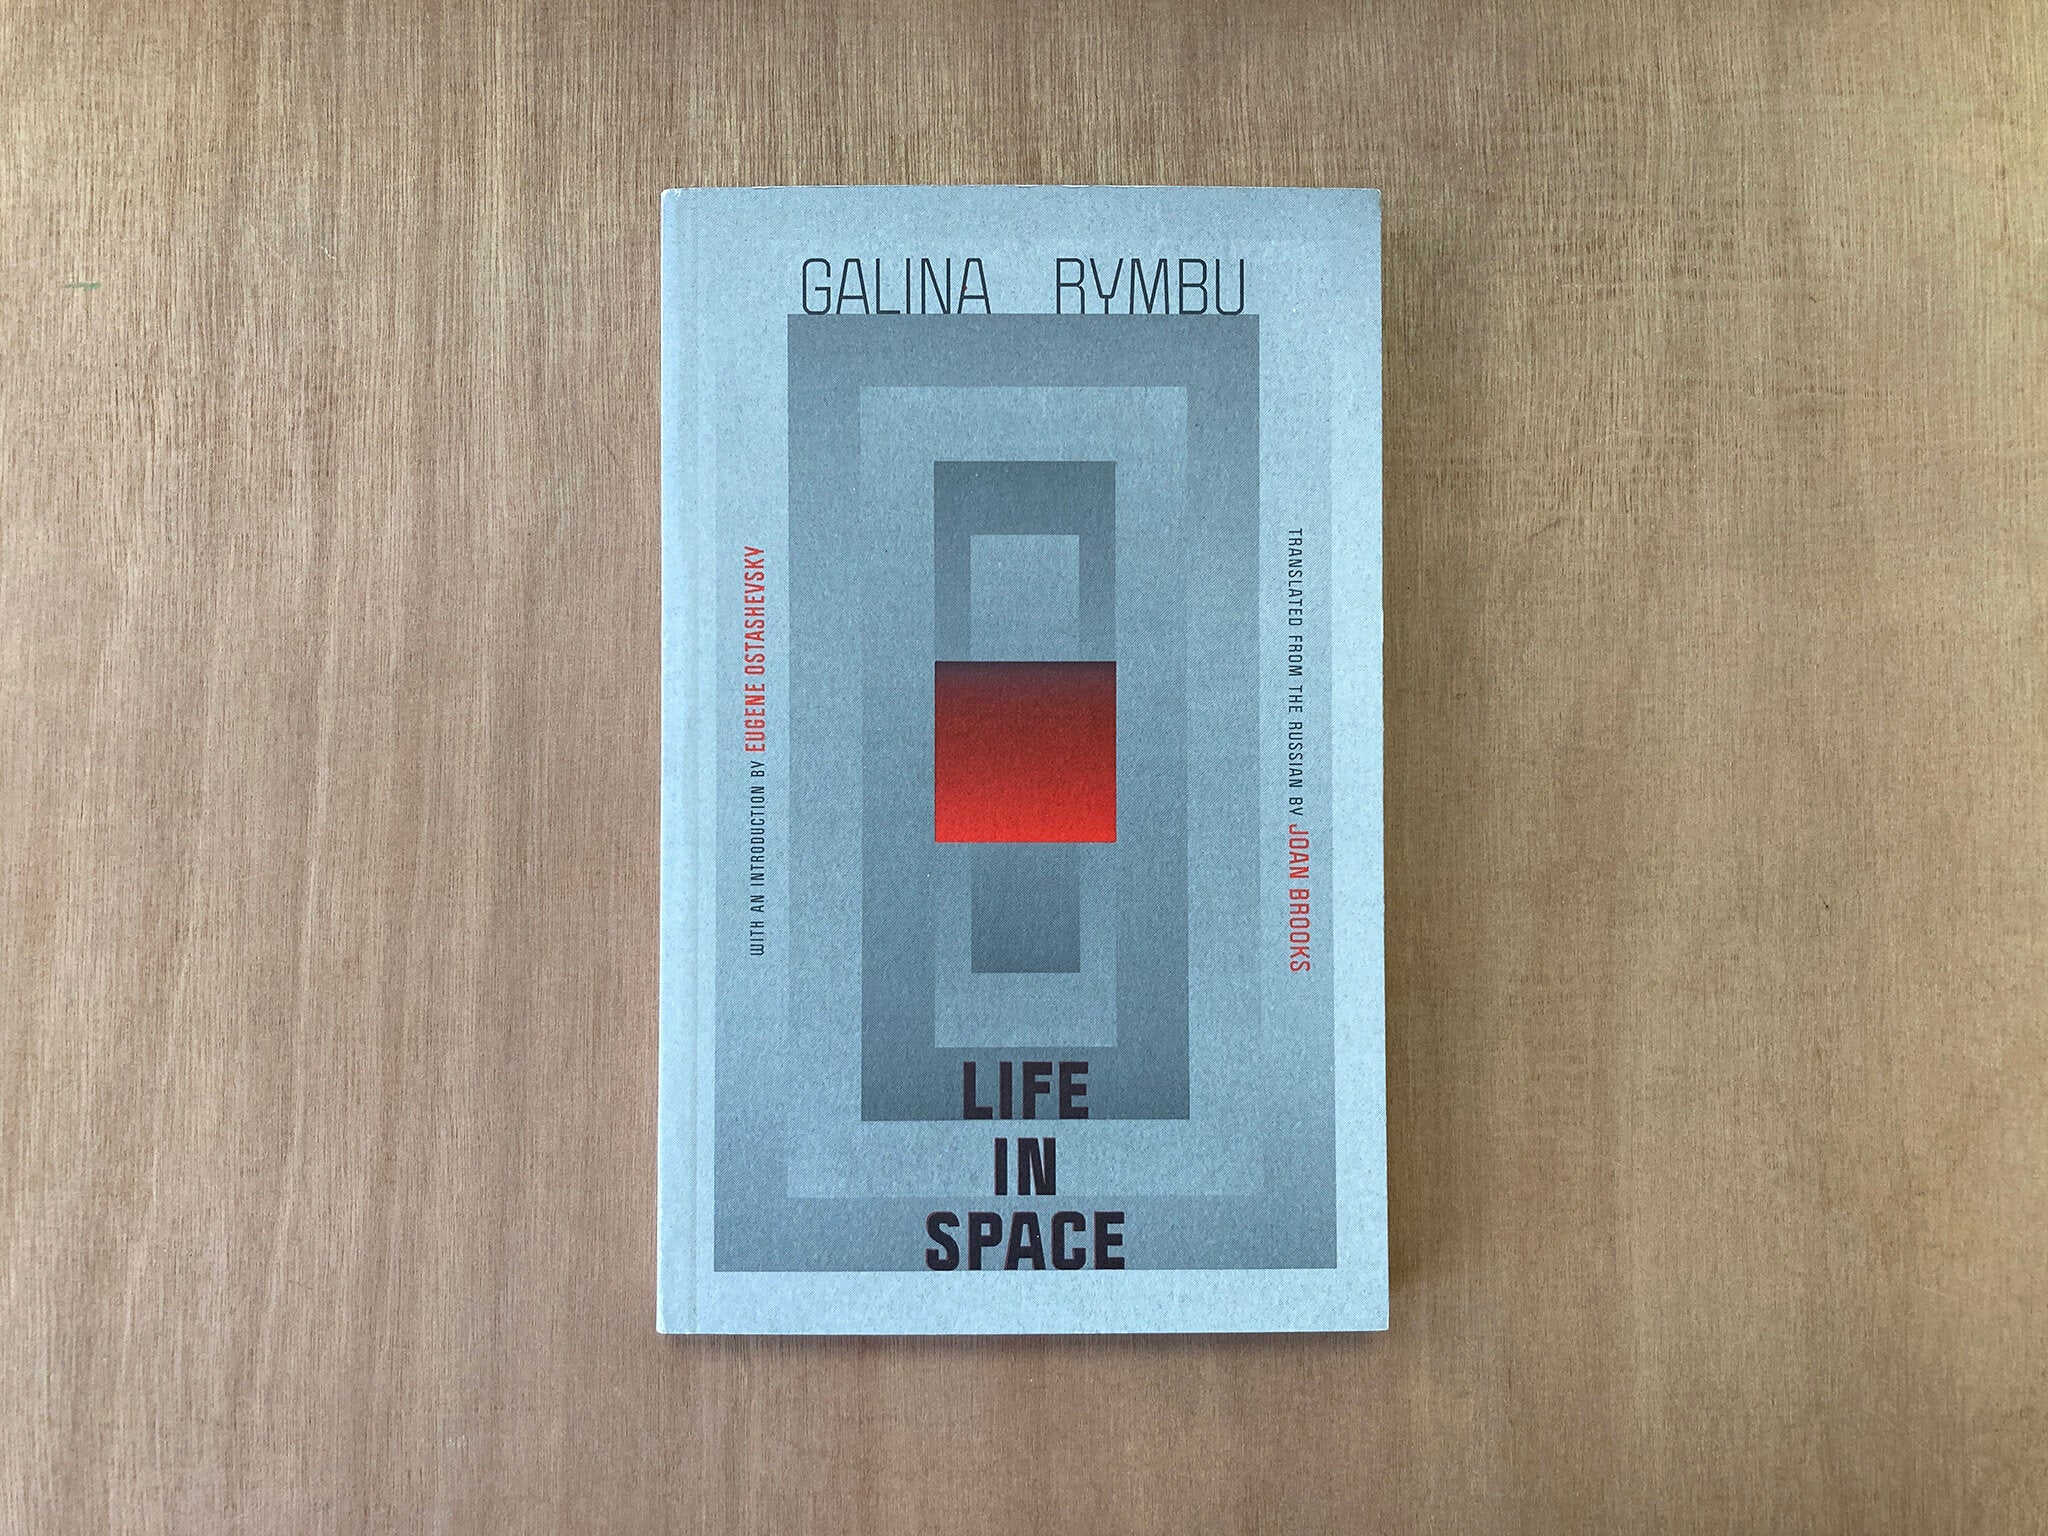 LIFE IN SPACE by Galina Rymbu (translated by Joan Brooks)